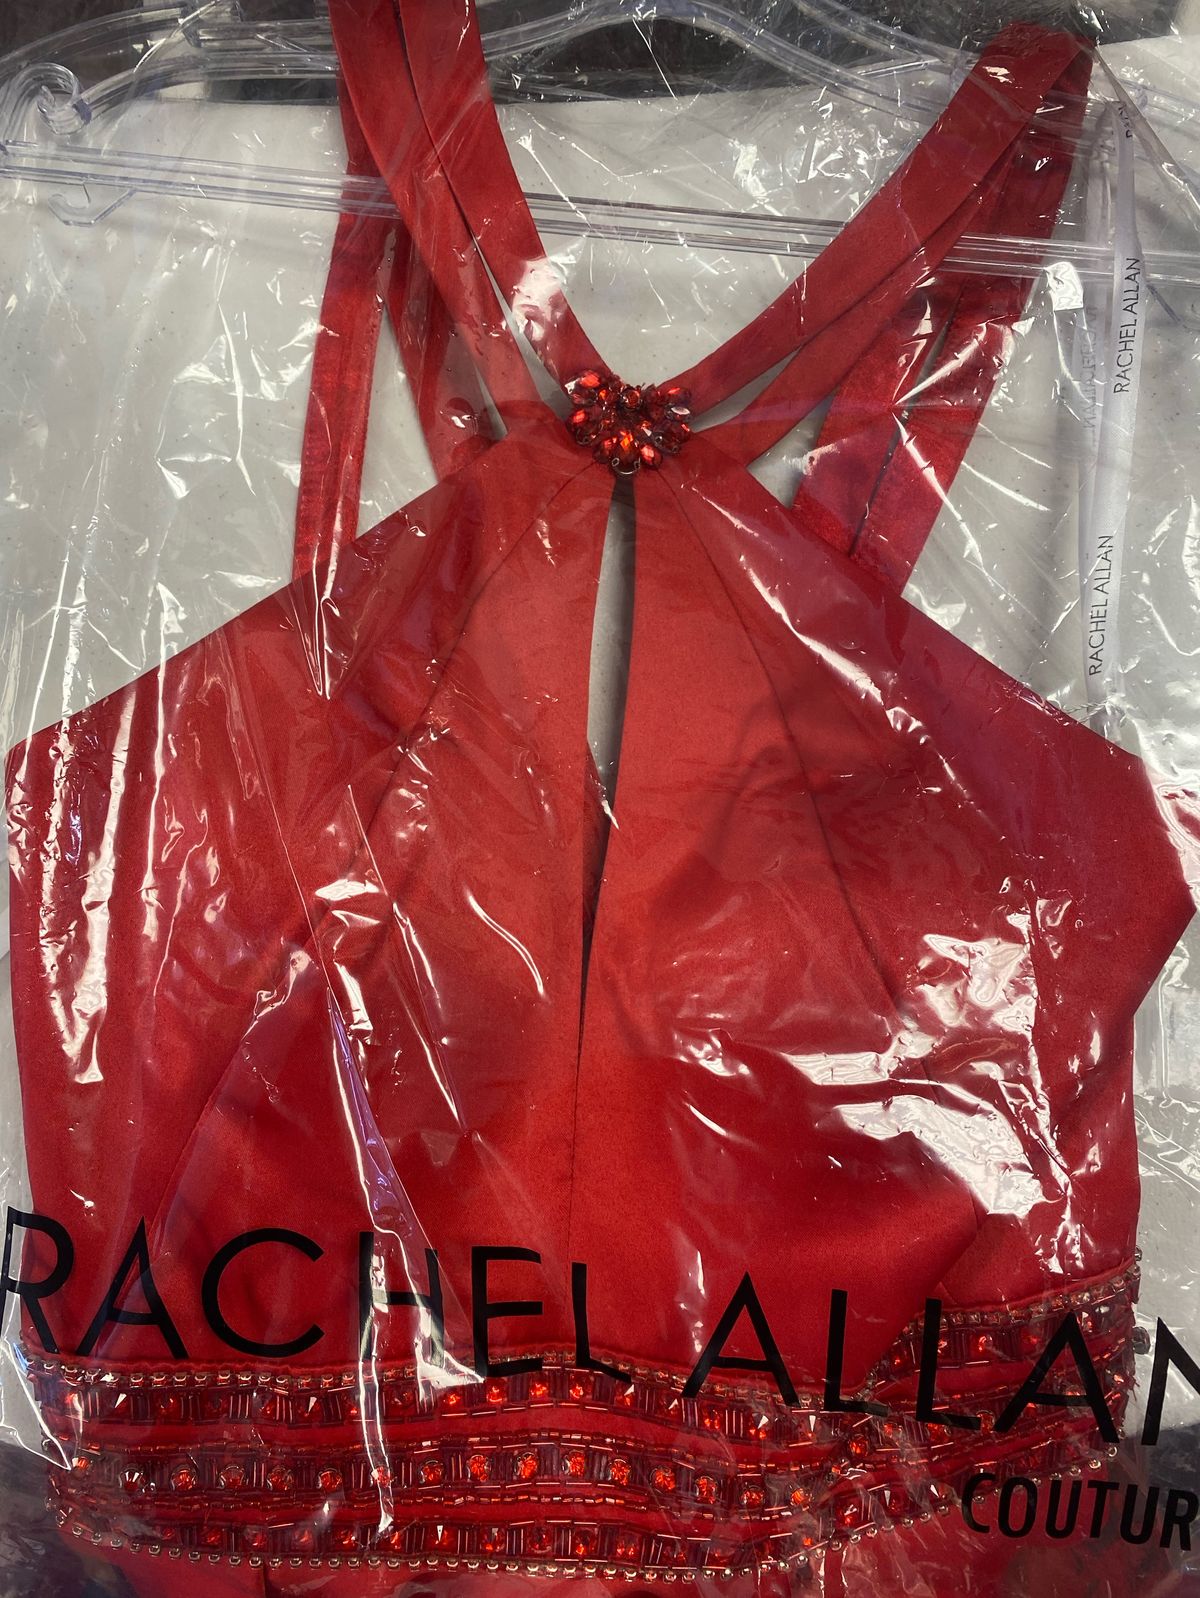 Rachel Allan Size 4 Halter Red A-line Dress on Queenly